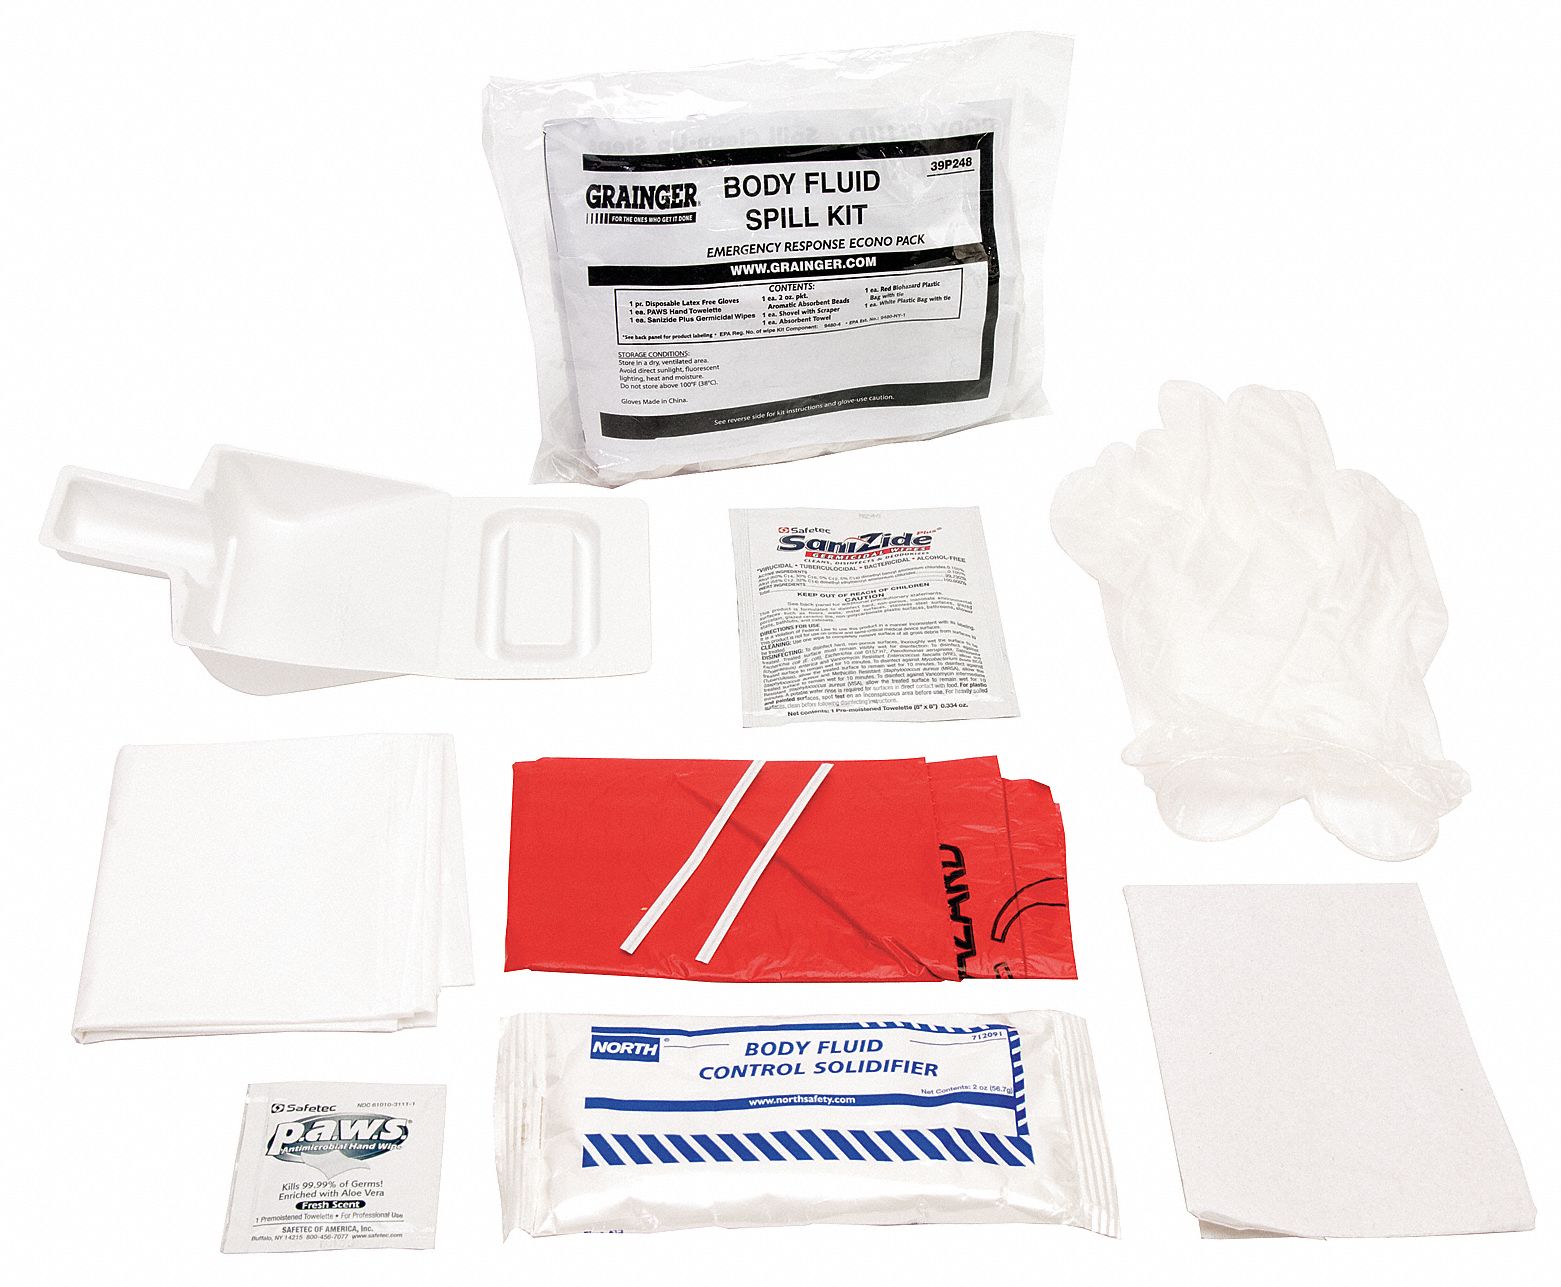 Bloodborne Pathogen Kit, Poly Bag, Clear, 1 EA